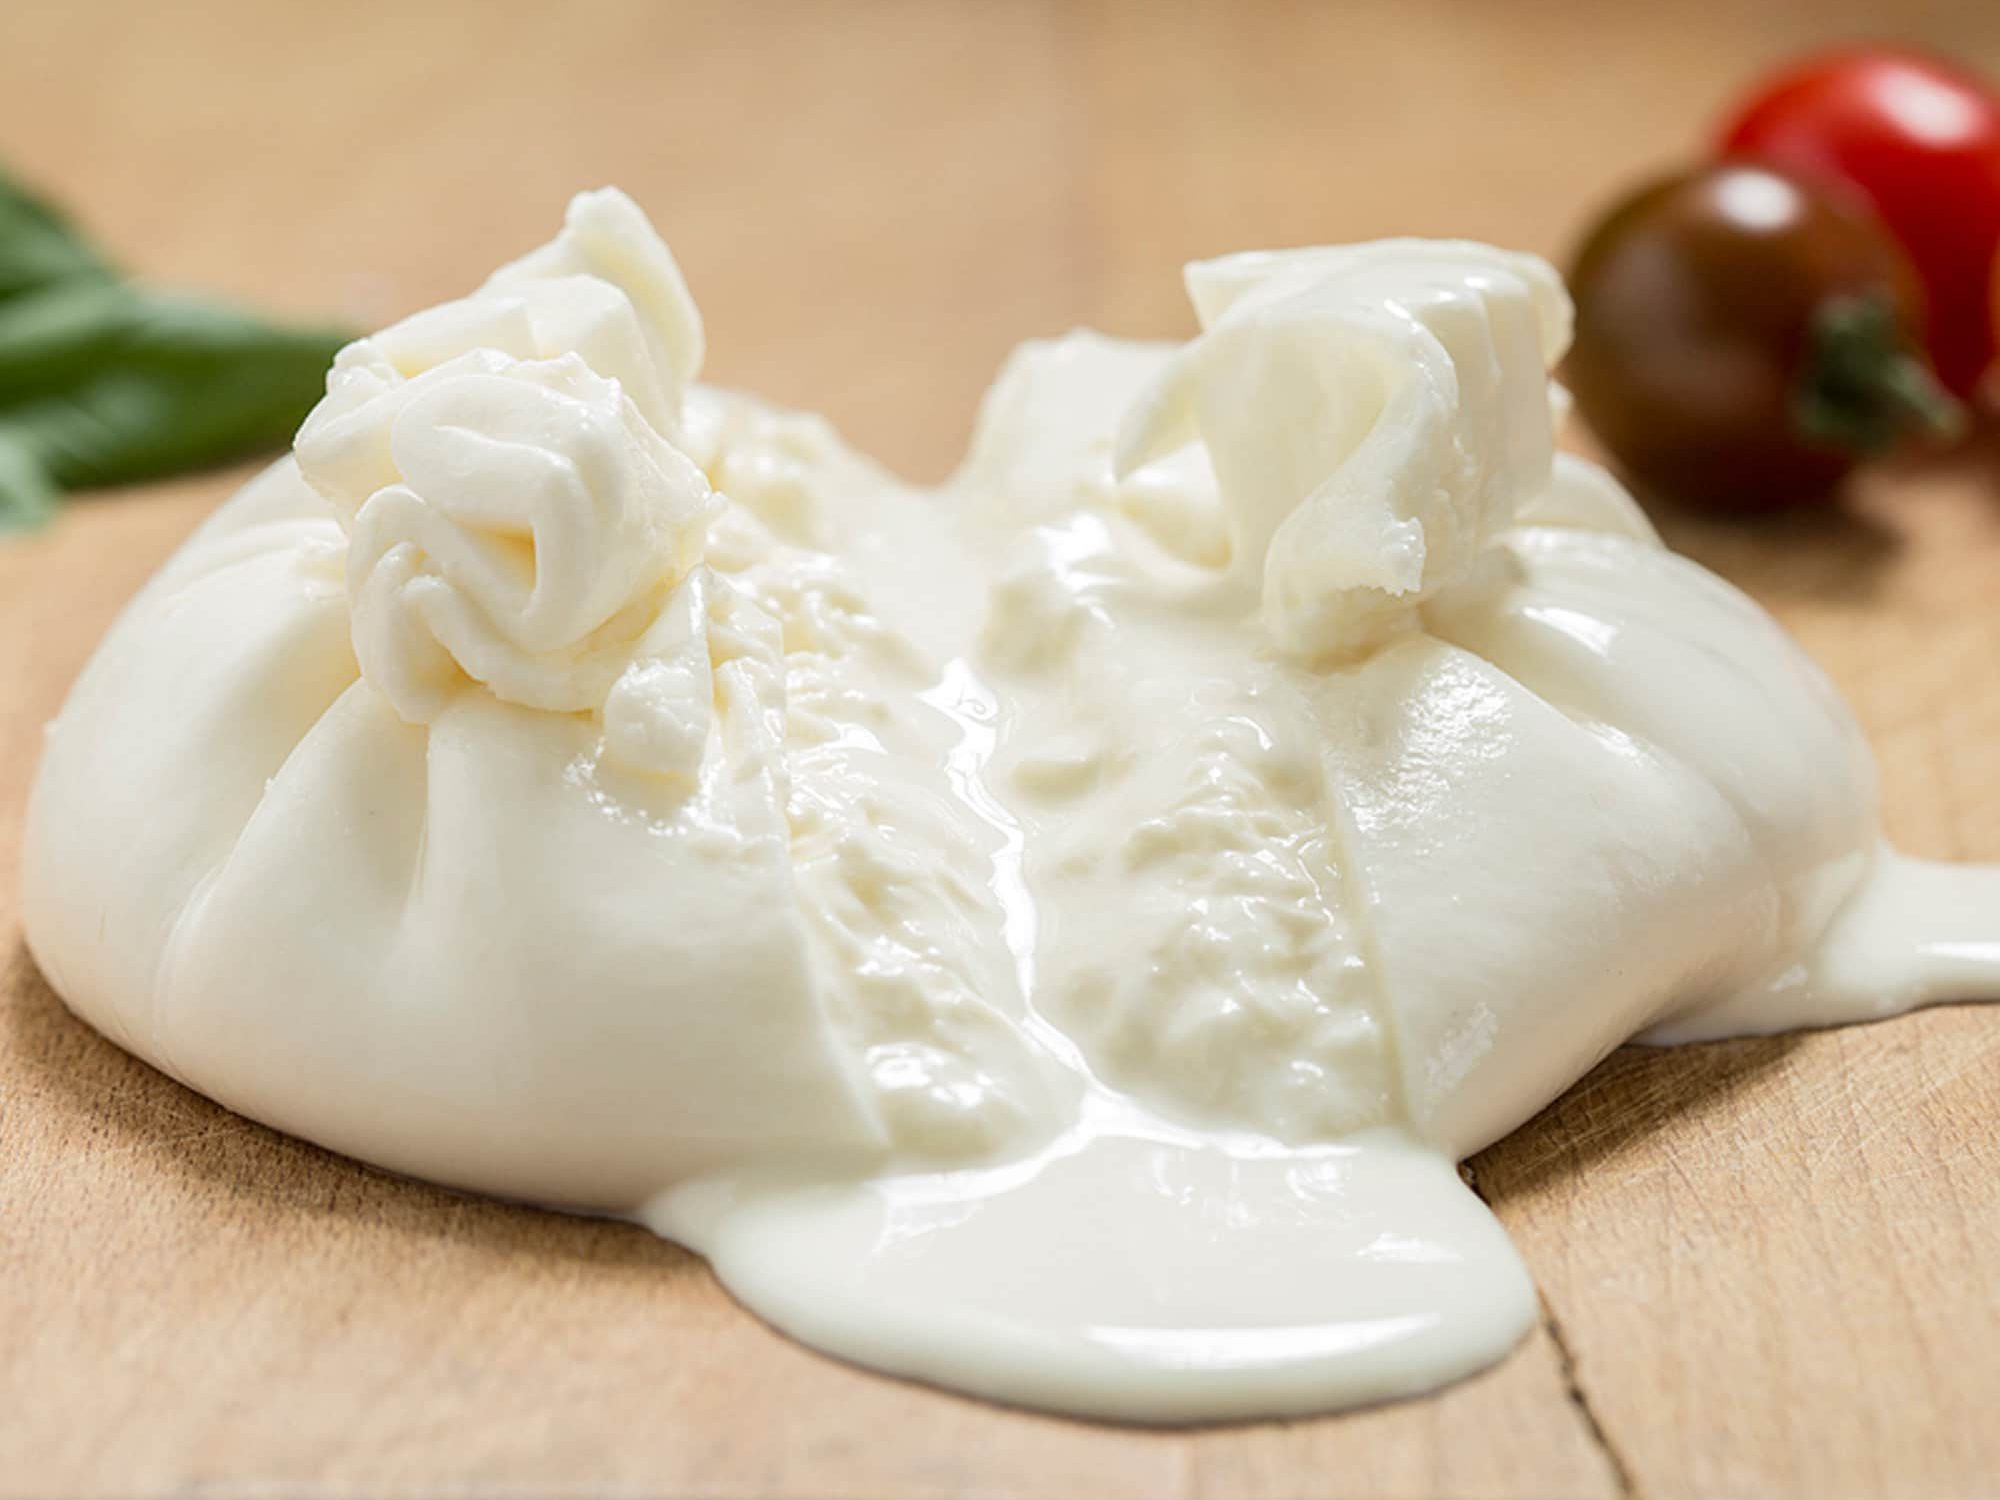 Italian Burrata cheese cut in half to show creamy insides